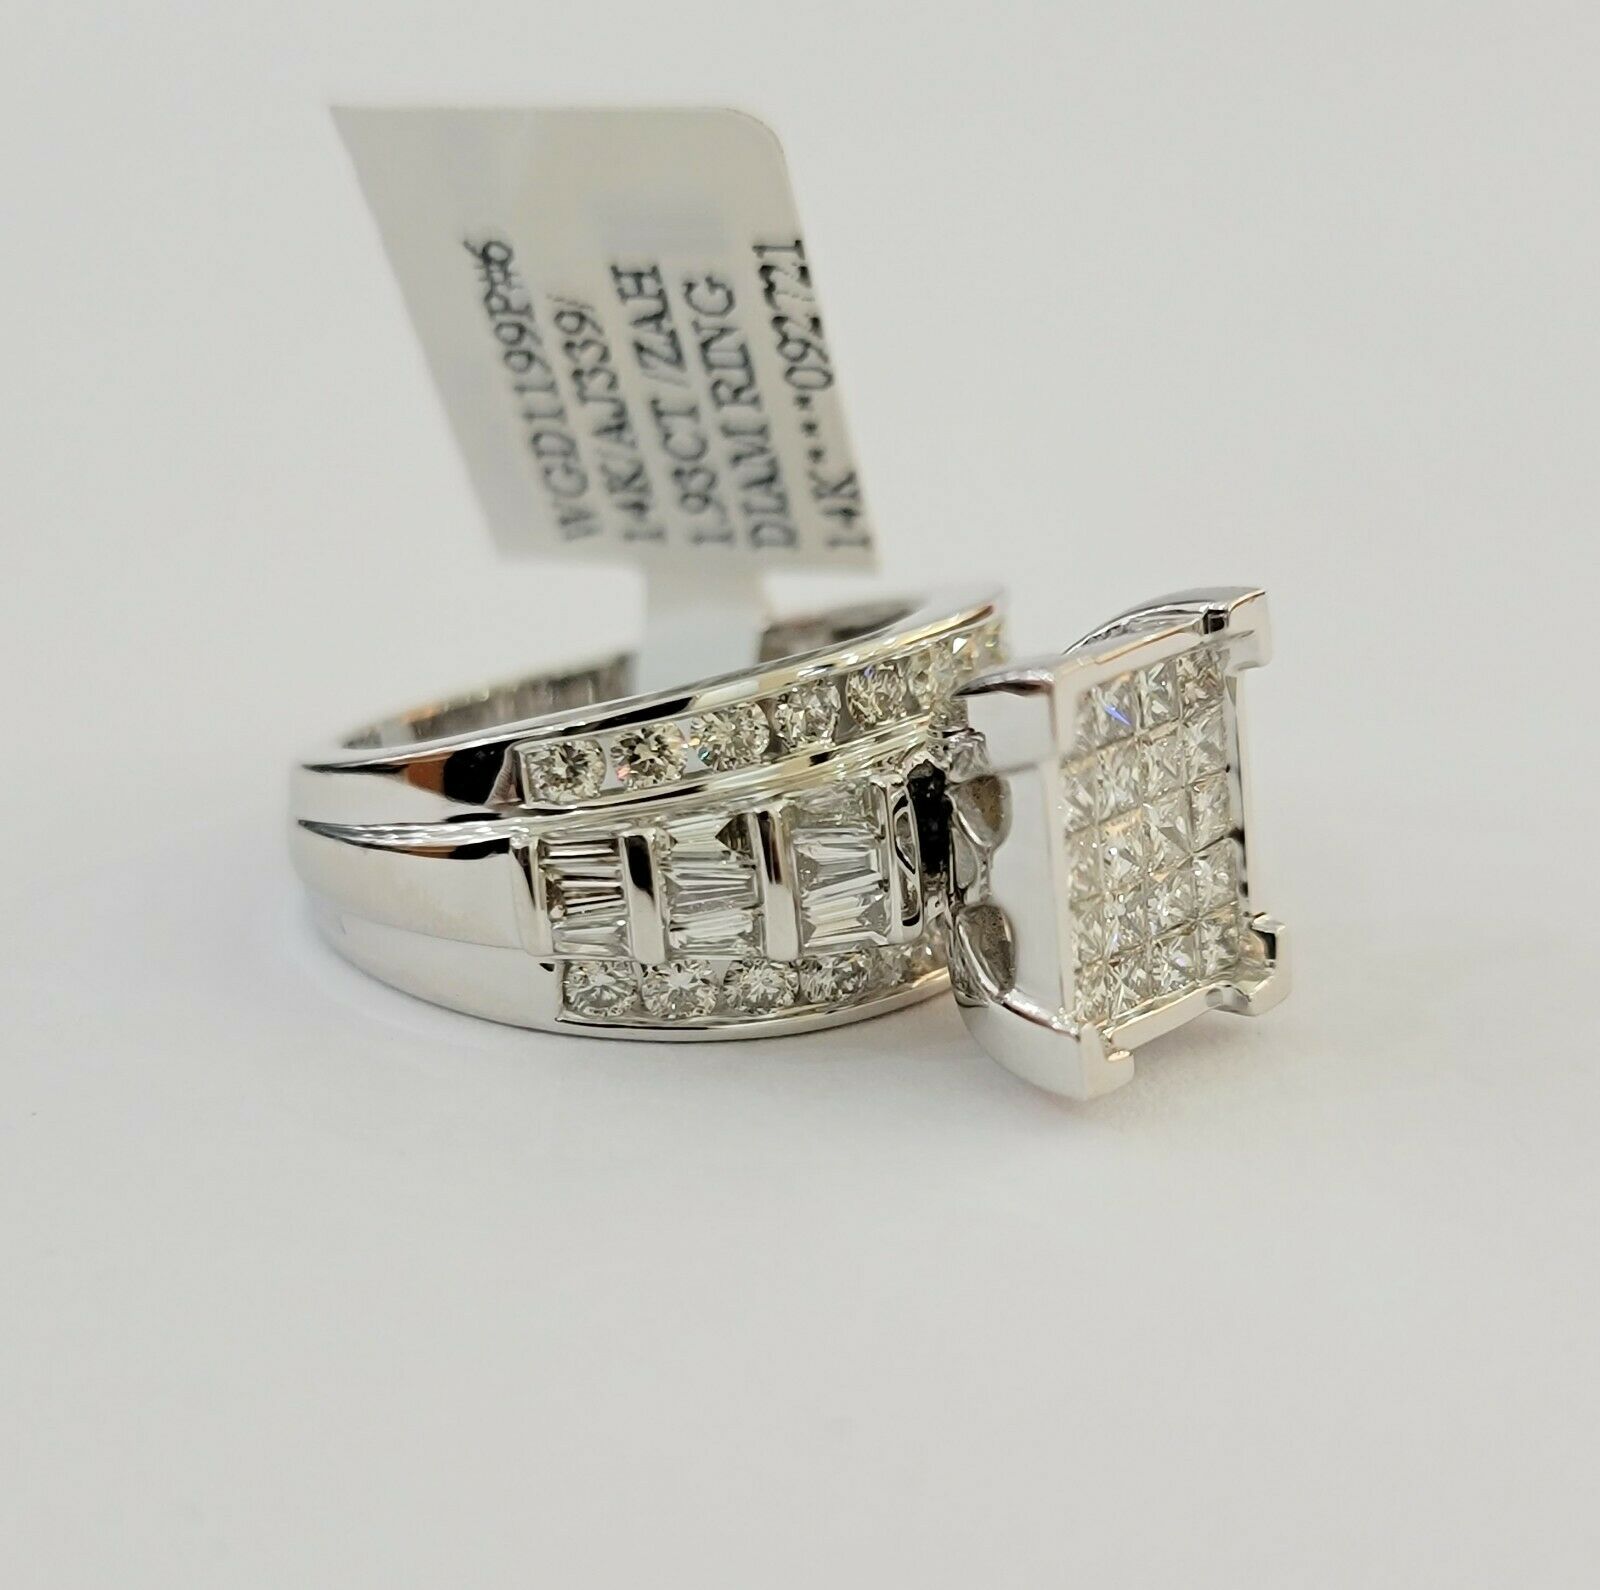 14k white Gold Ladies Ring 2 CT Diamond Princess Cut, Baguette, Round, REAL 14kt